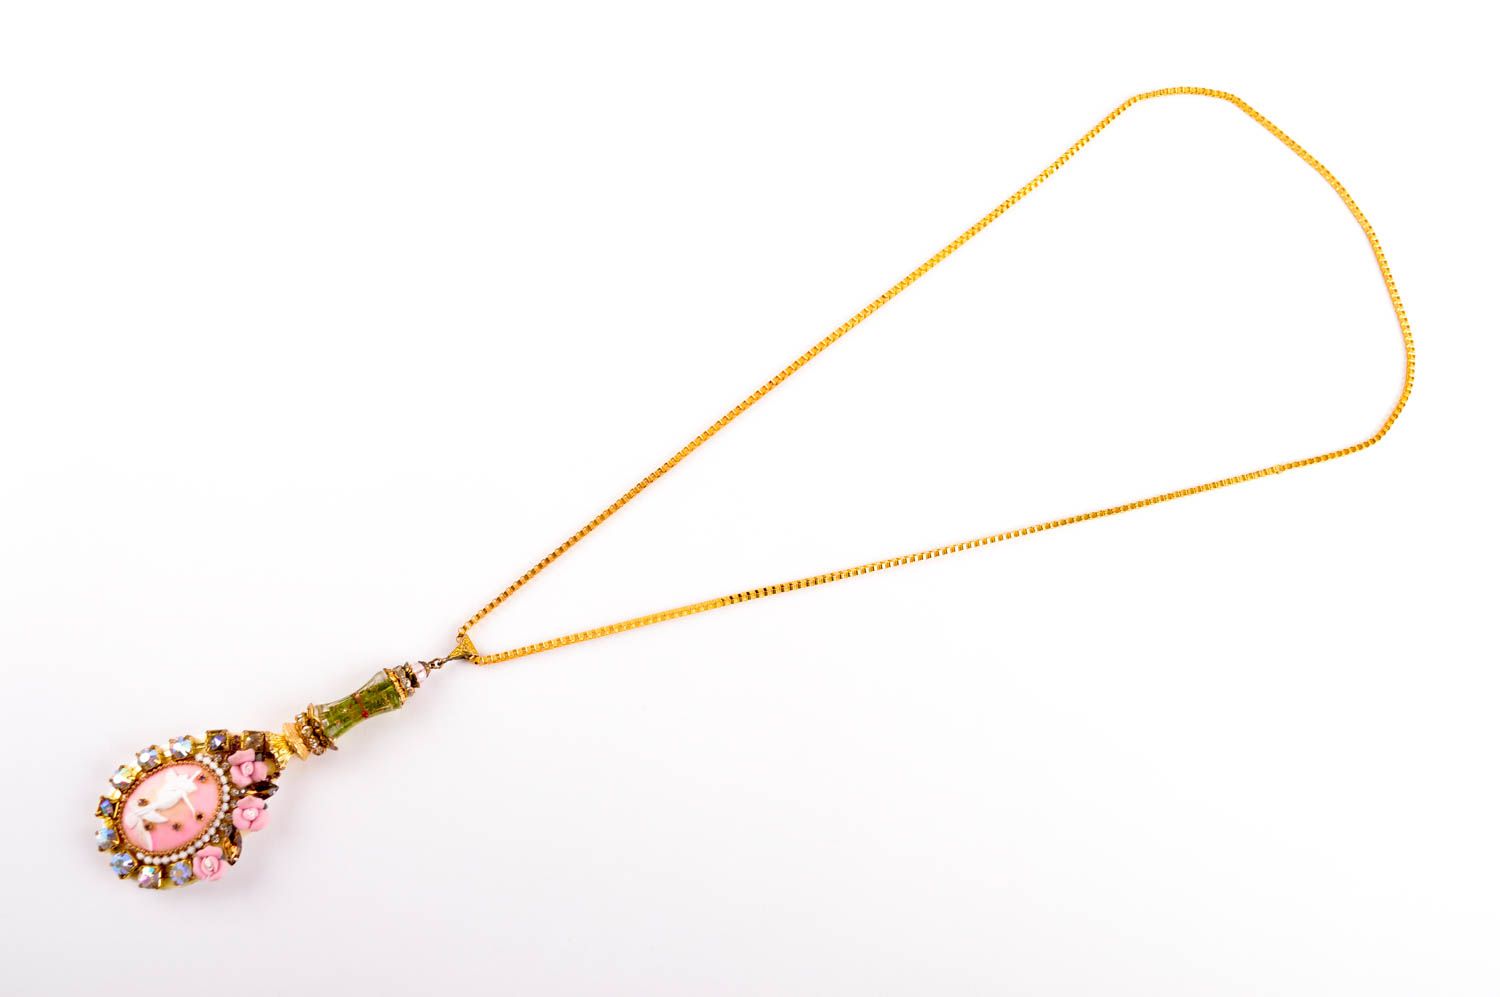 Handmade pendant unusual pendant for women designer accessory with stones photo 5